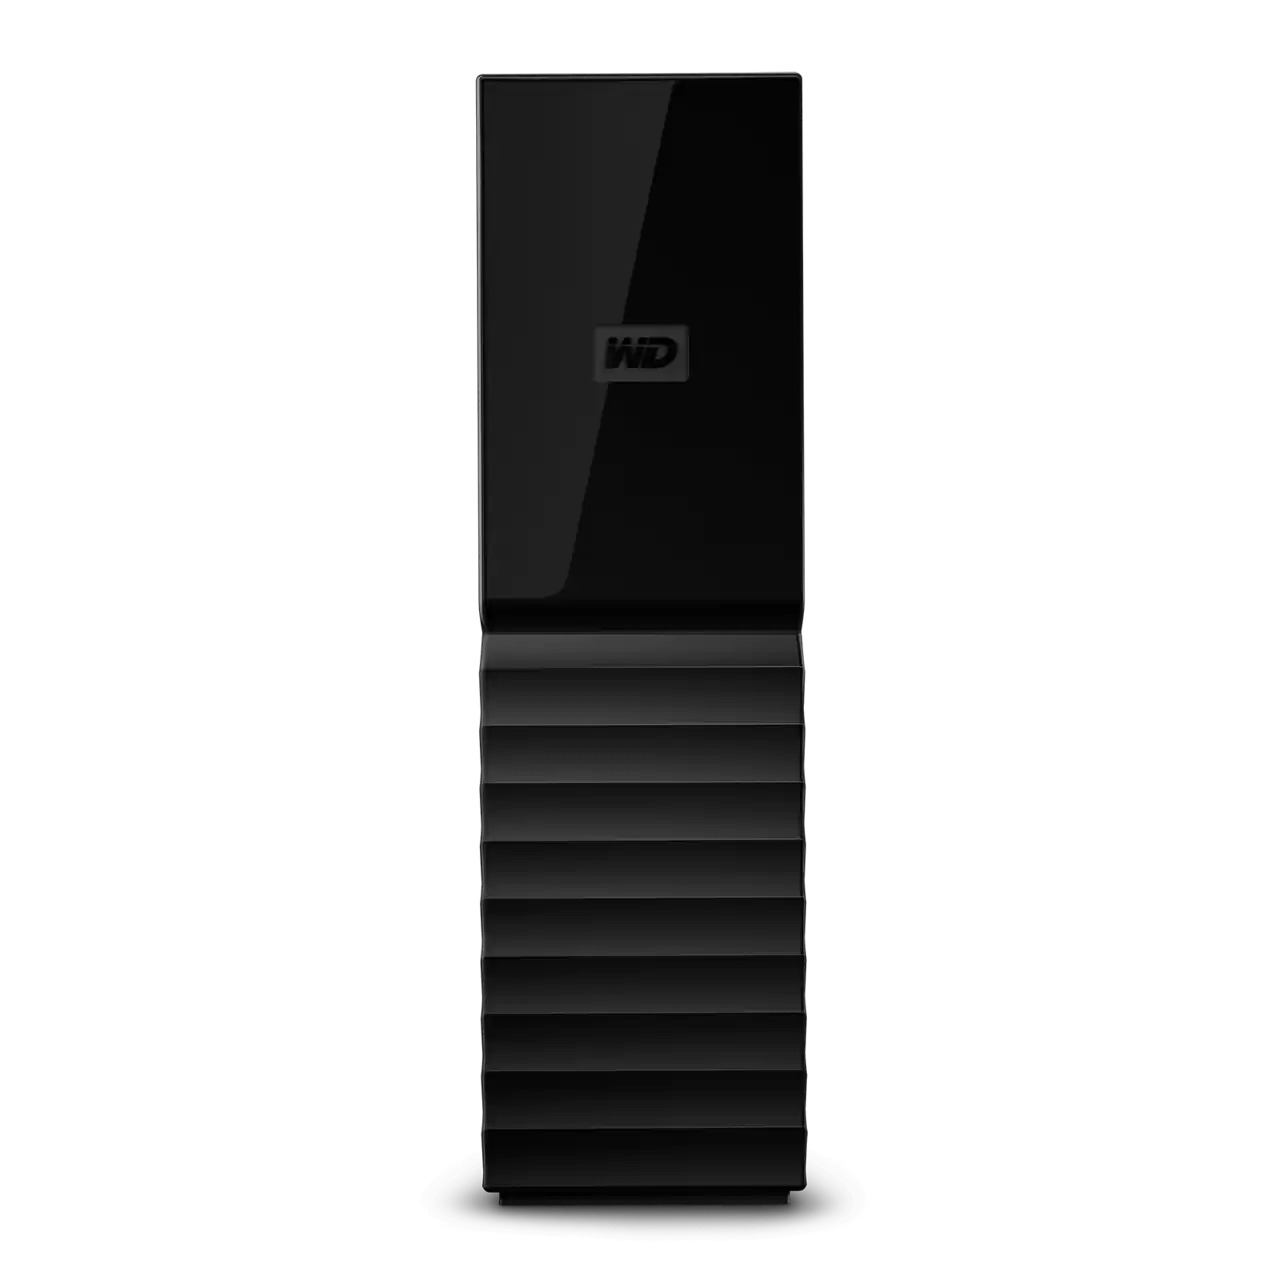 Western Digital Black USB 3.2 Gen 1 4TB Desktop Hard Drive 3-Year Warranty 139.3mm x 49mm x 170.6mm